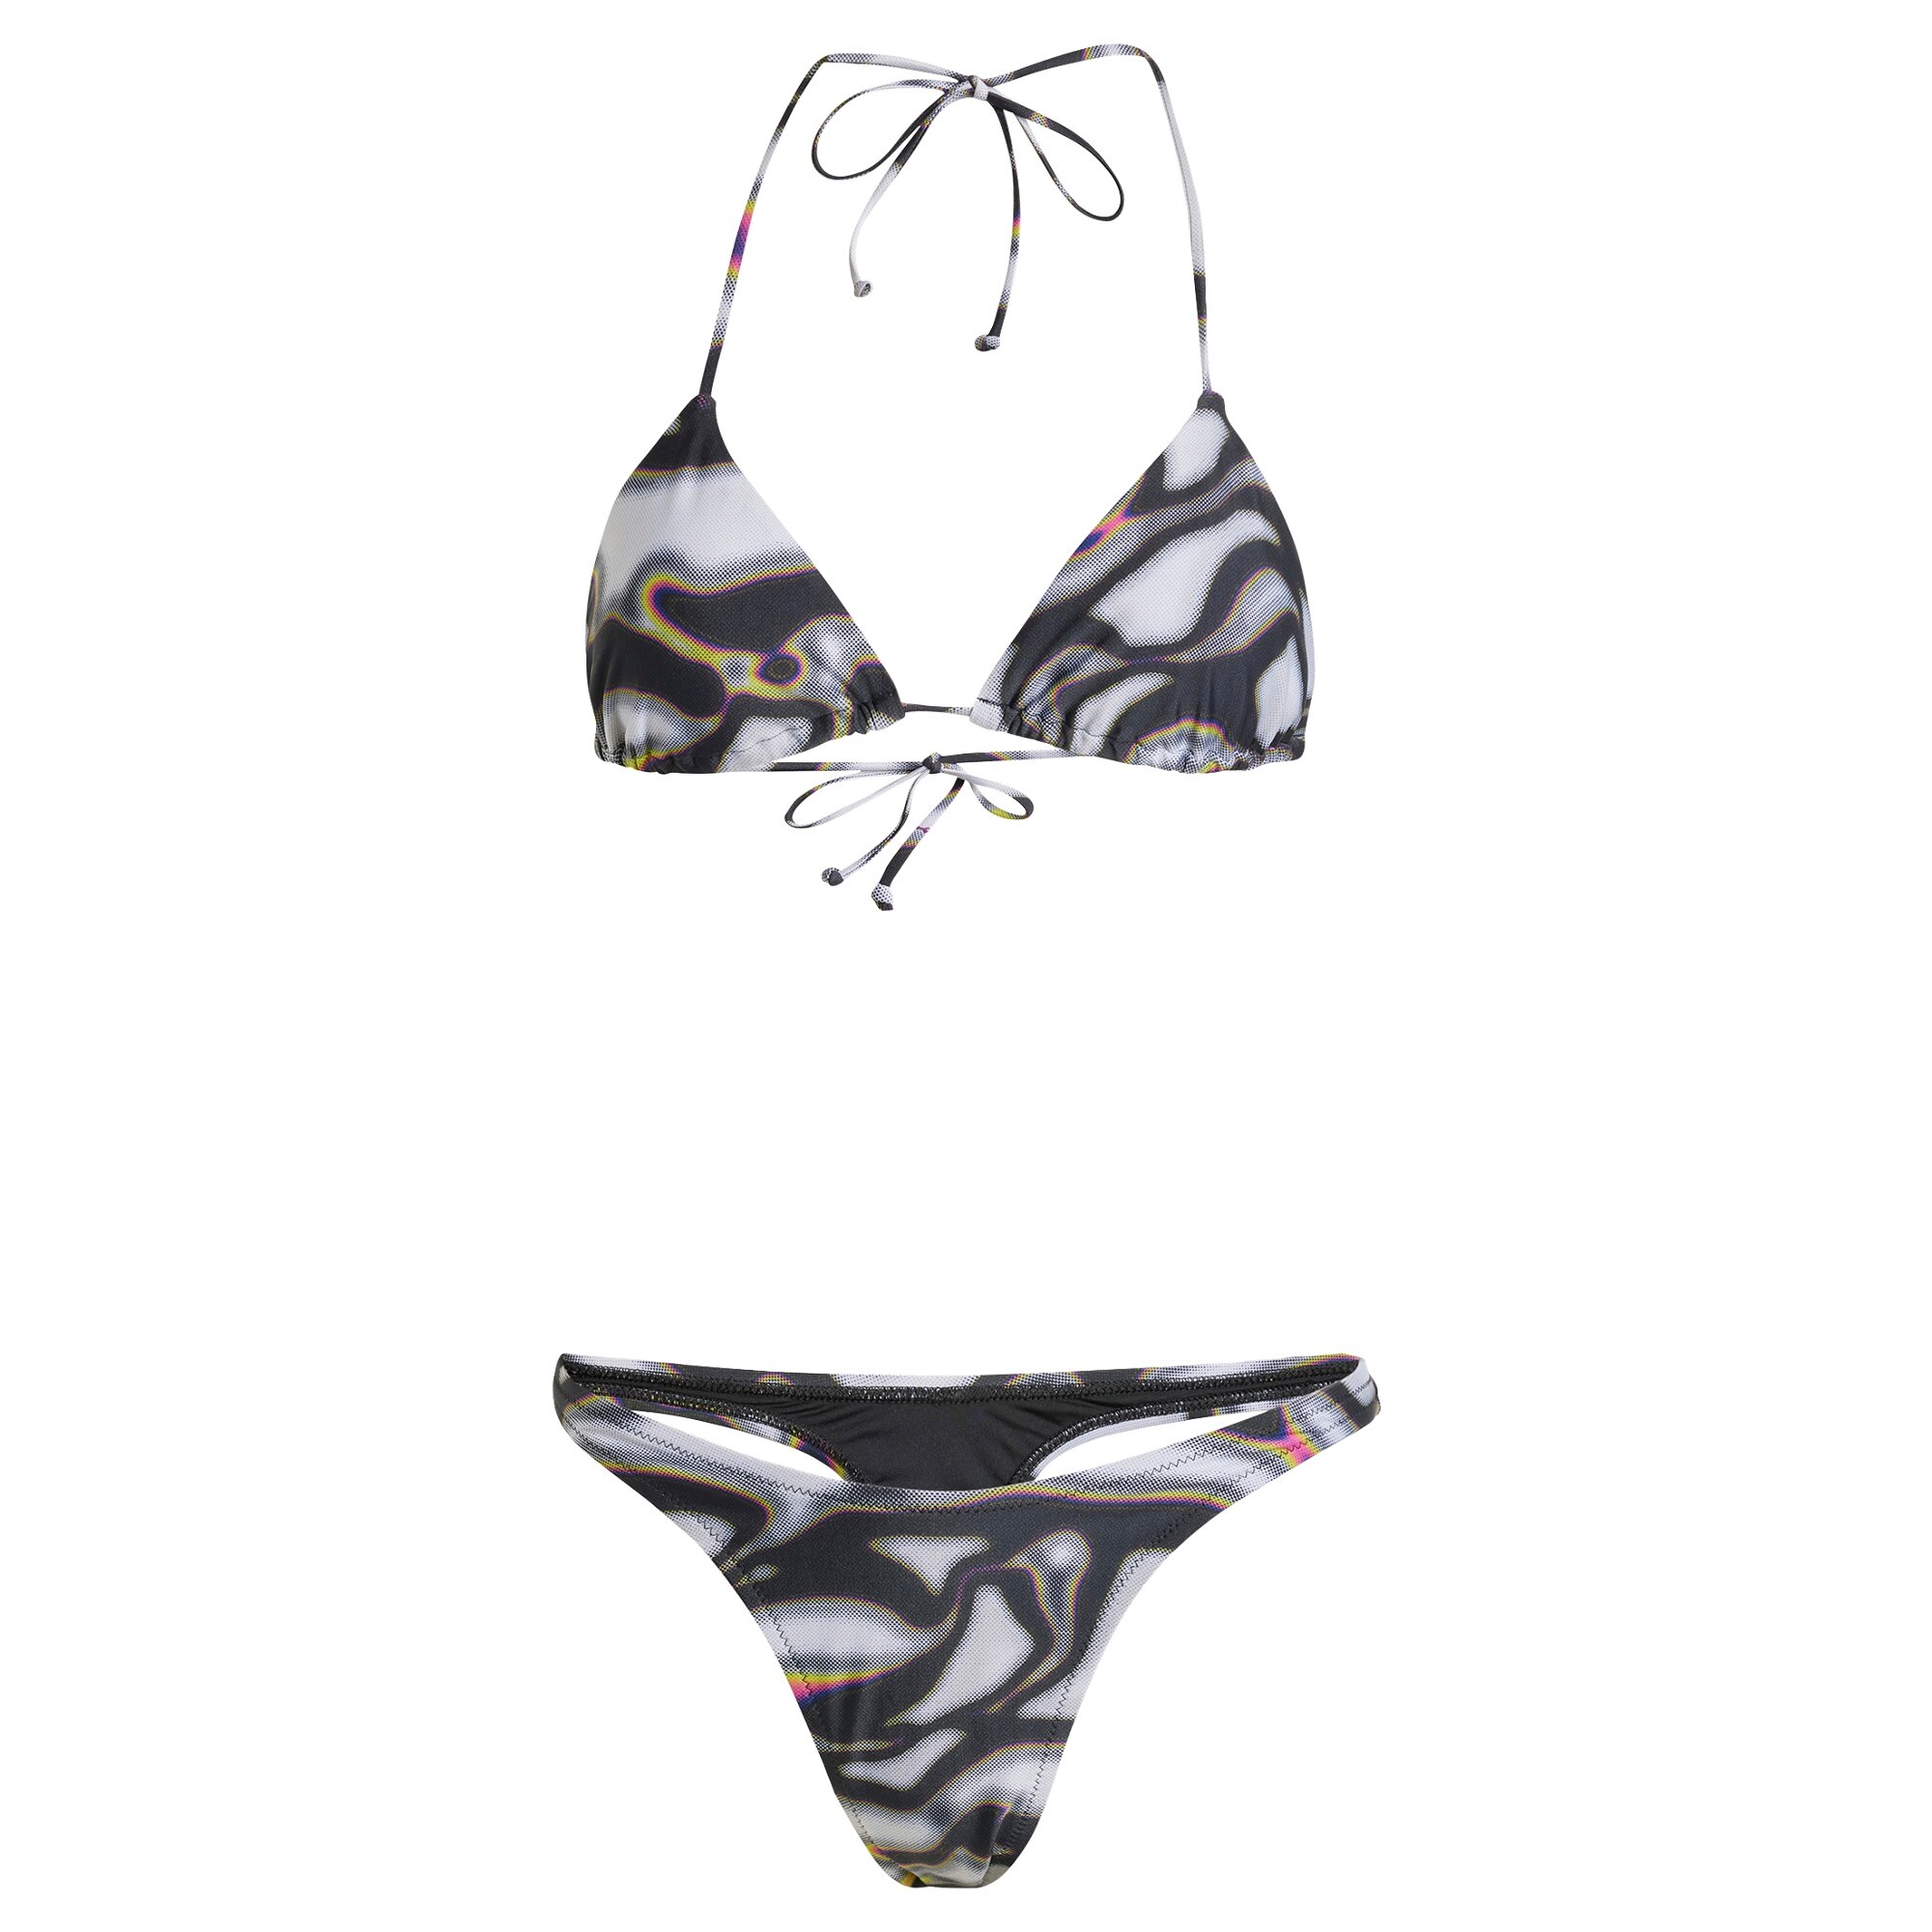 ADIDAS ORIGINALS Bikini de sport 'Pride' jaune clair / violet / rose / noir / blanc-Adidas Originals 1